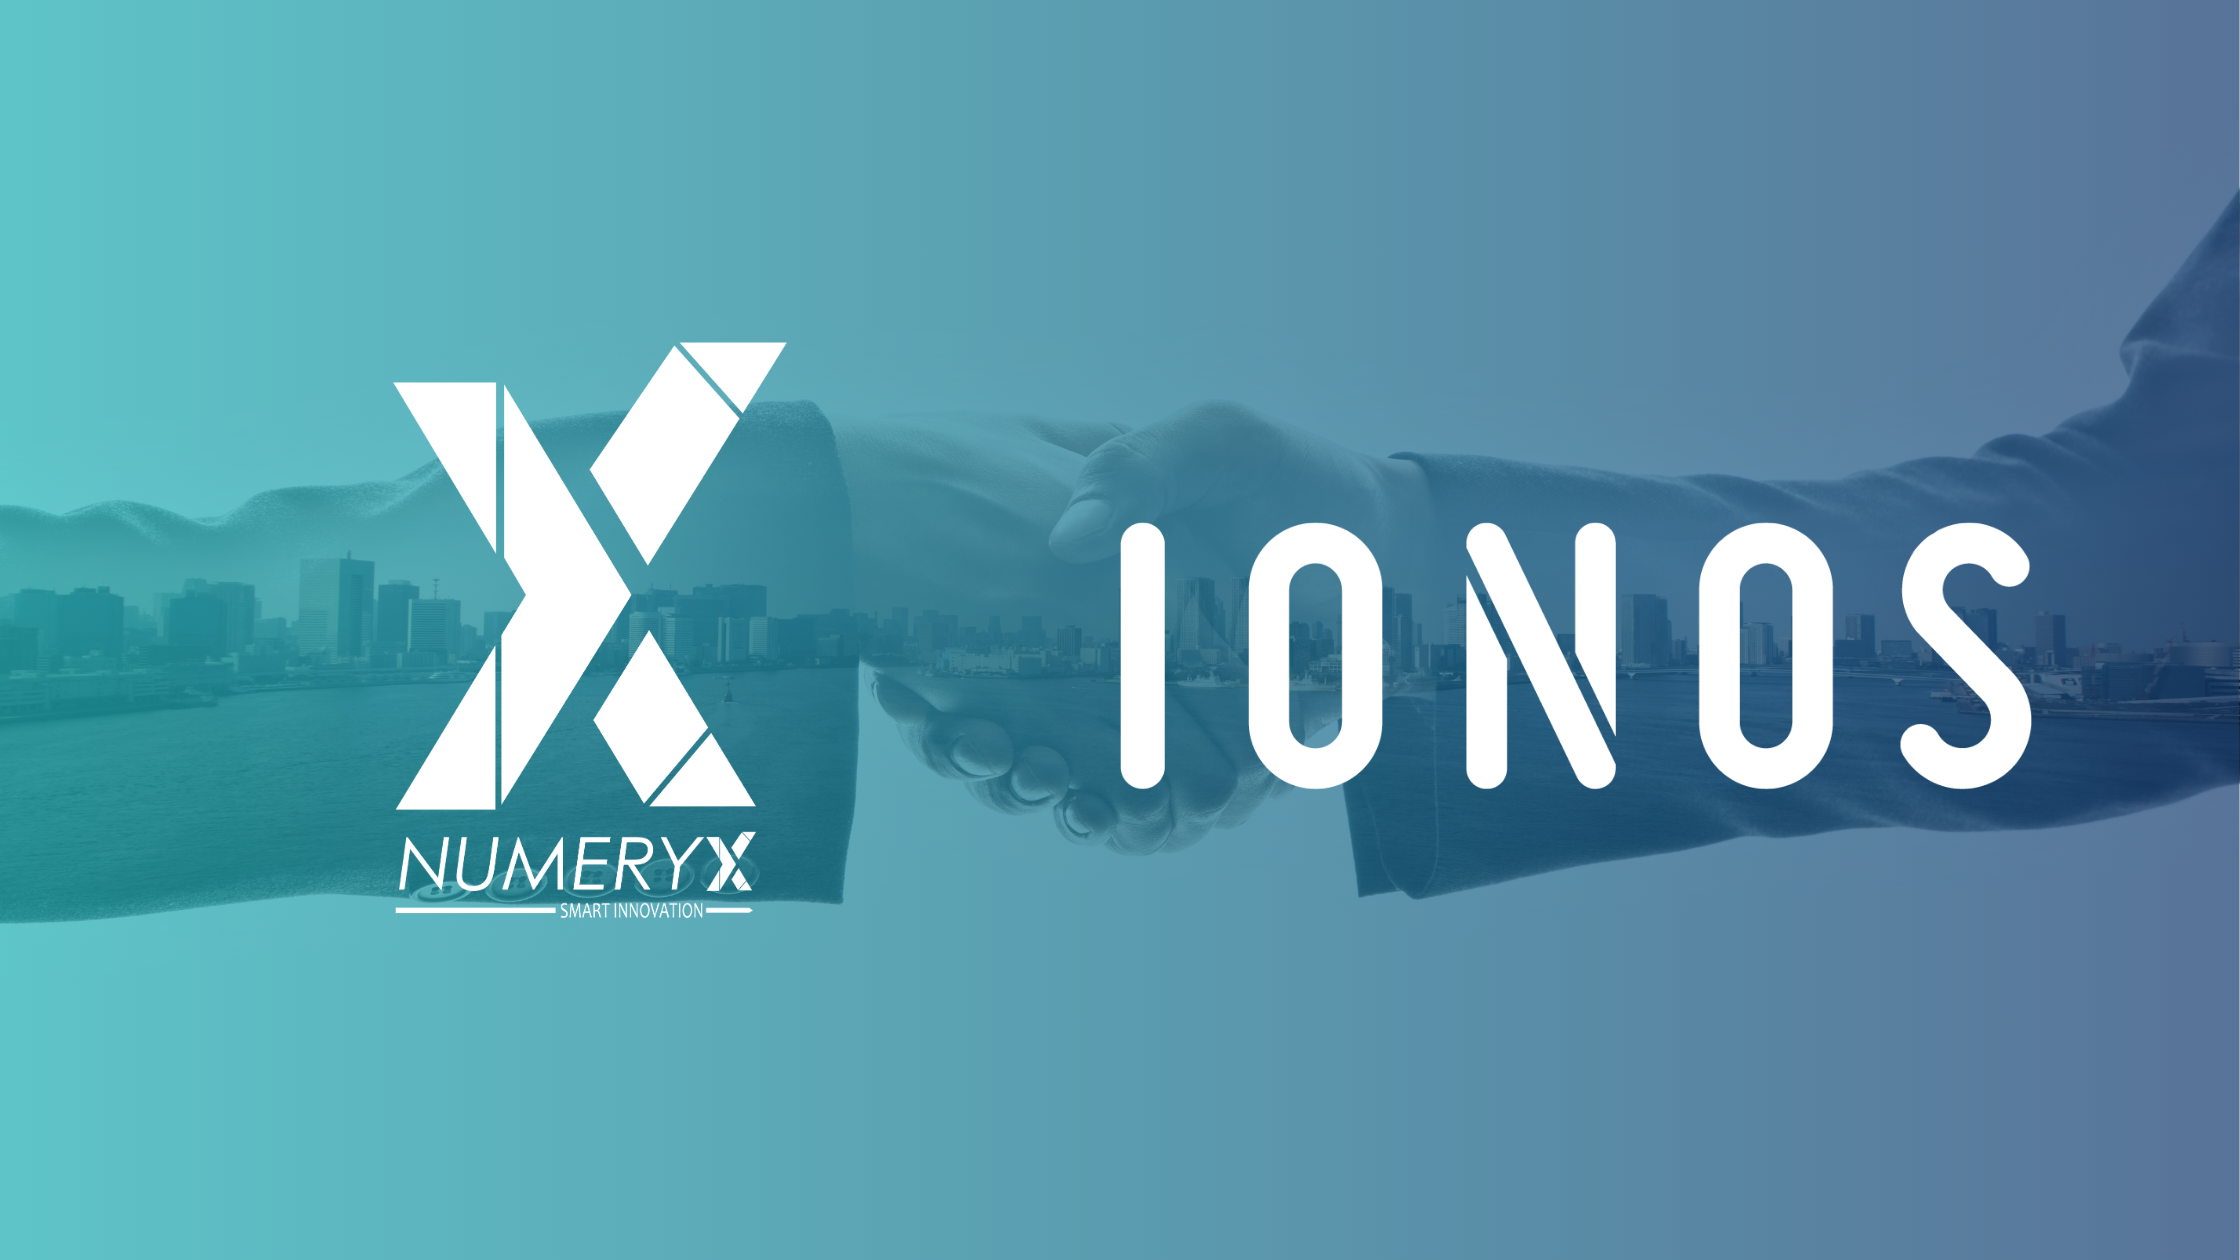 NUMERYX officialise son partenariat avec IONOS